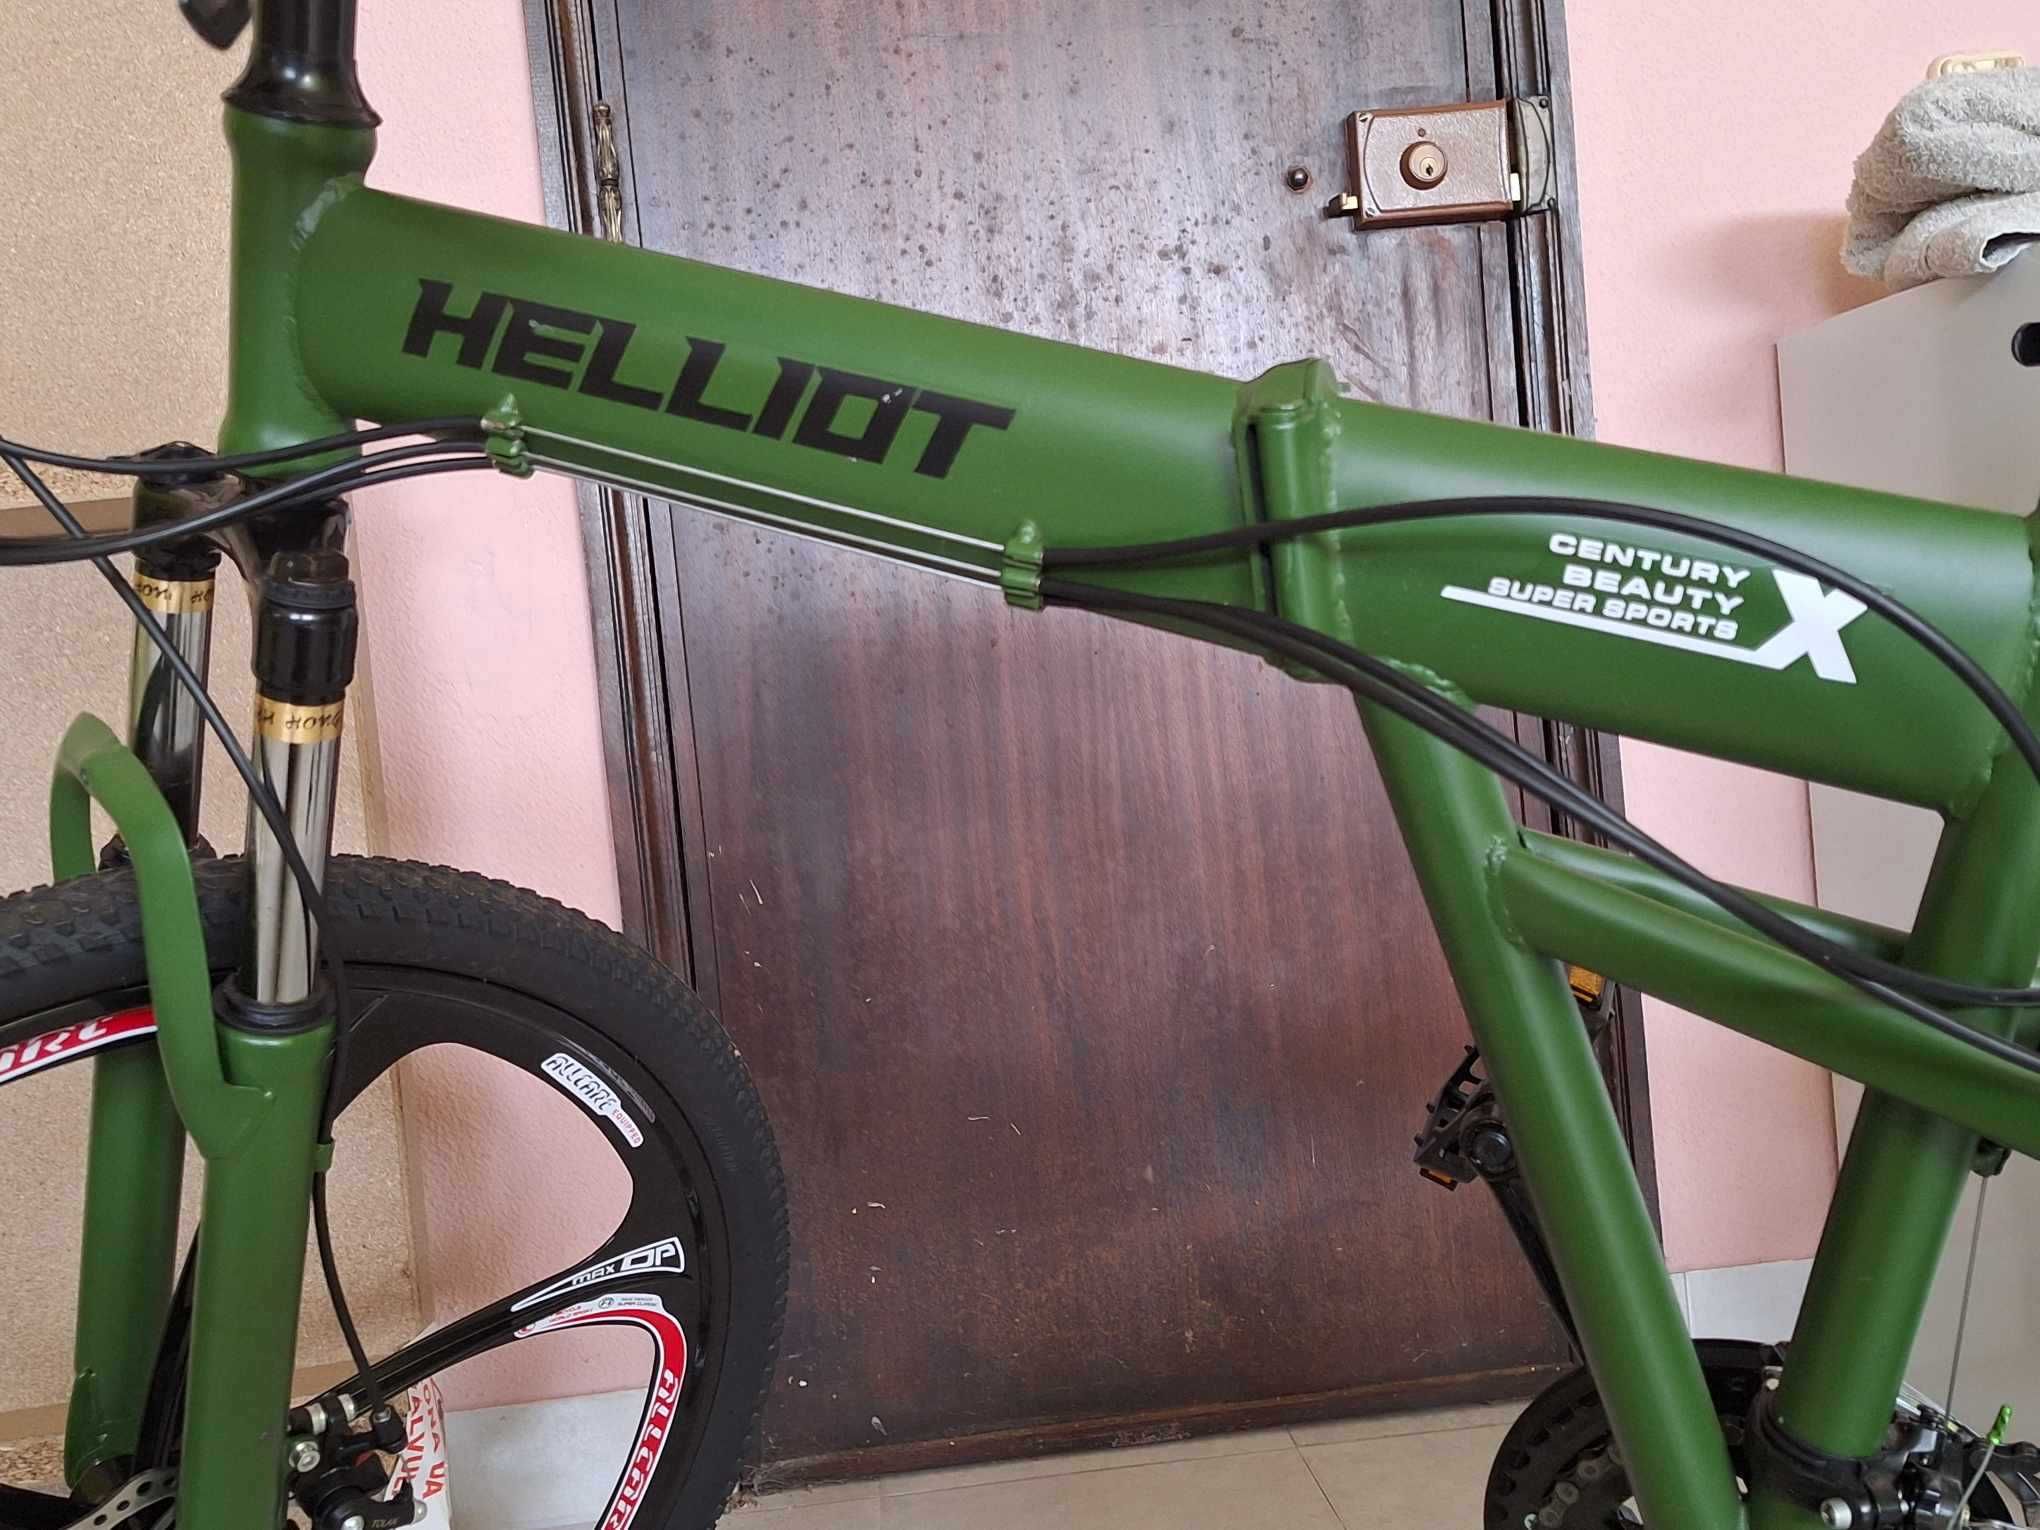 Bicicleta Helliot - Modelo Hummer (Dobrável)